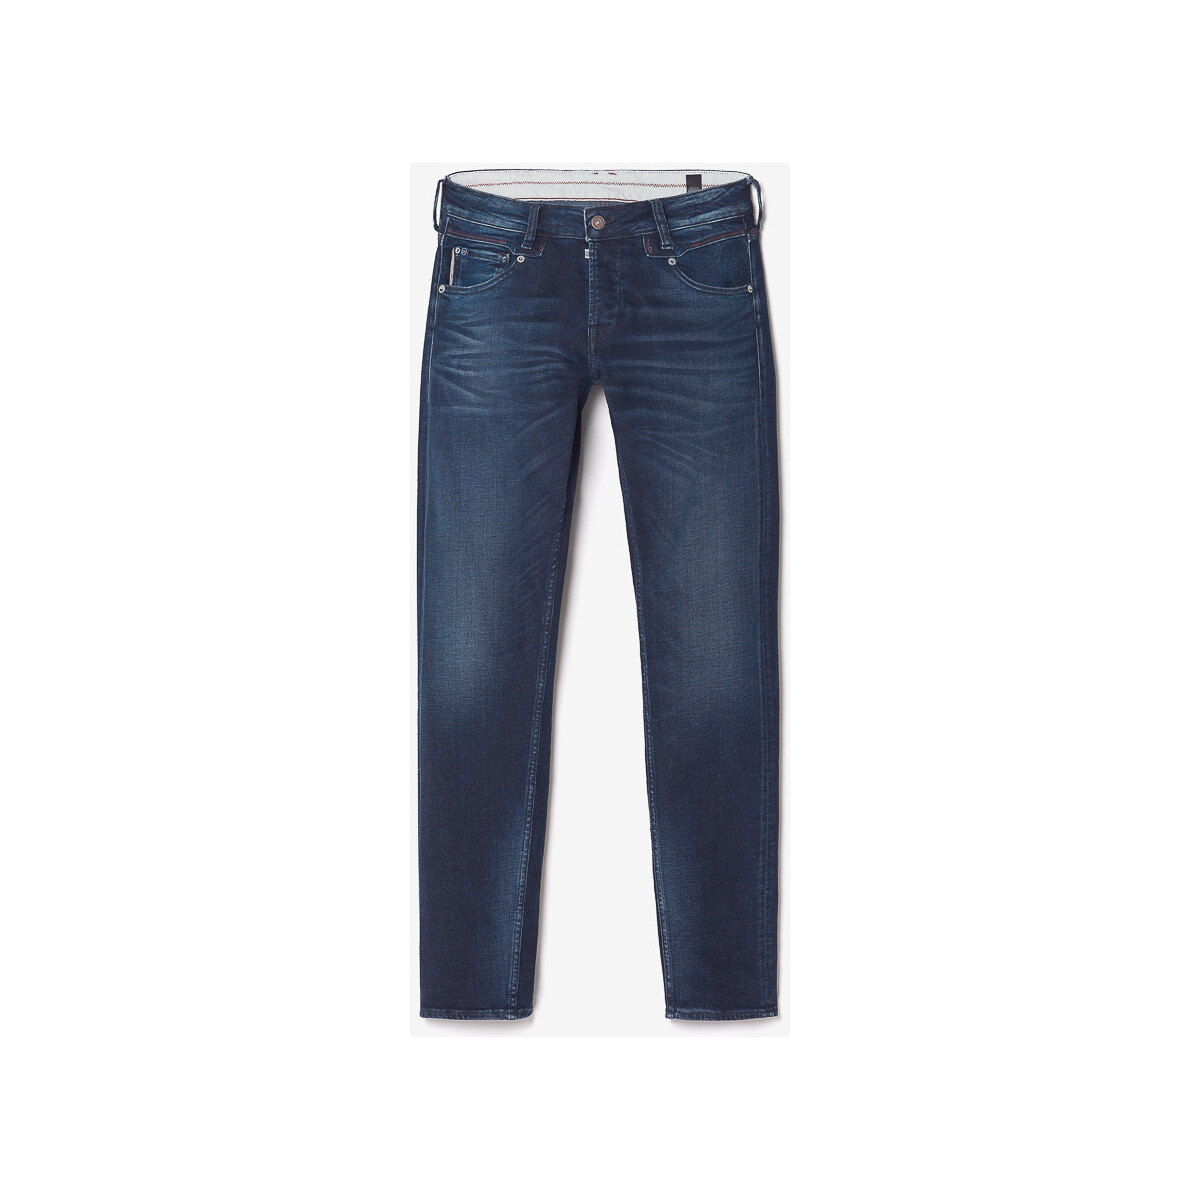 Le Temps des Cerises Bleu Roll 700/11 adjusted jeans bleu-noir XG54o8e0